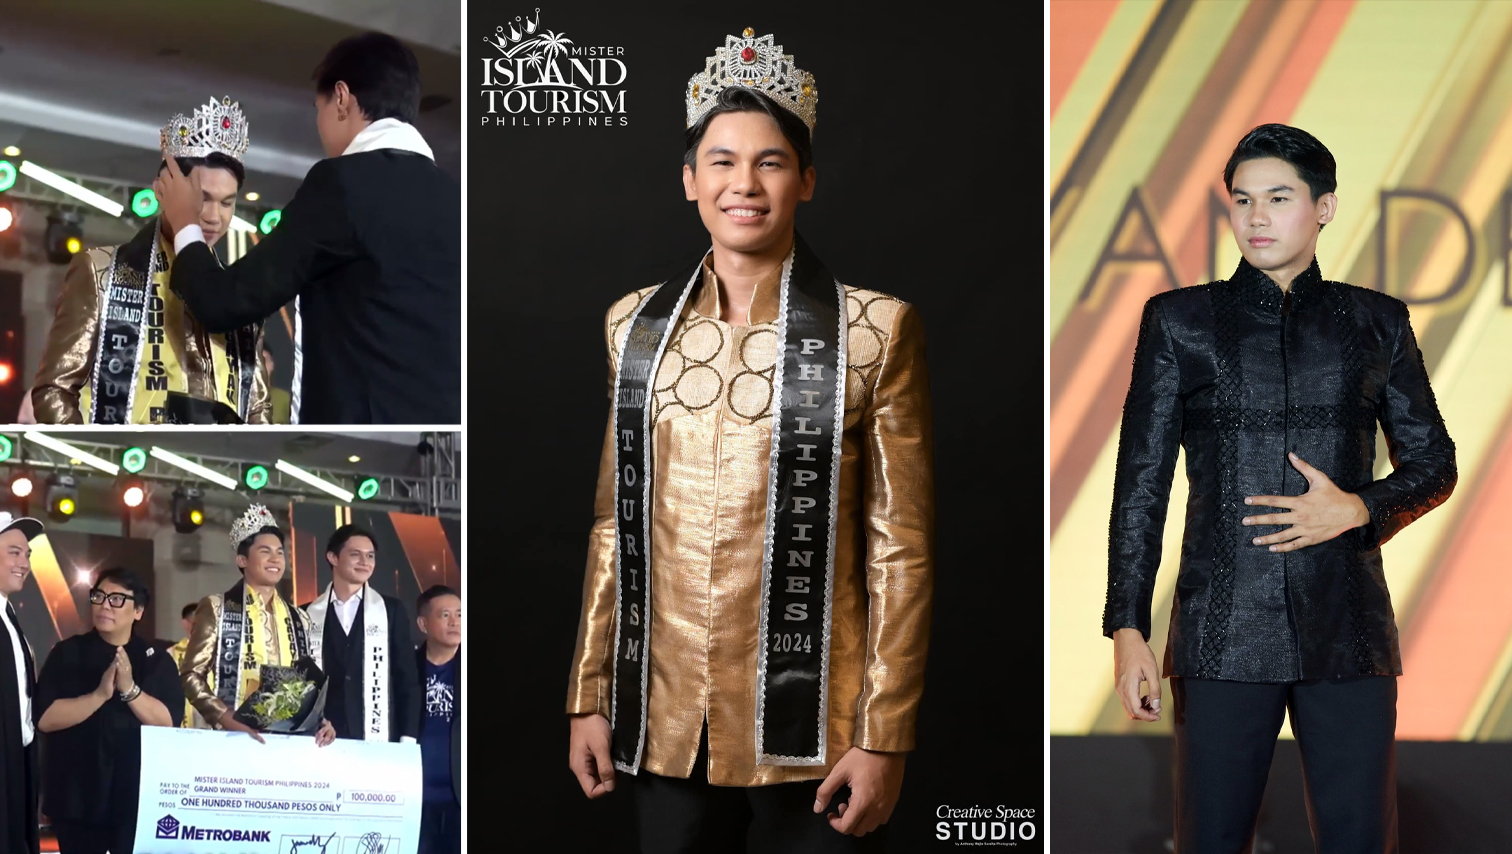 Cagayan de Oro hunk wins Mister Island Tourism Philippines 2024